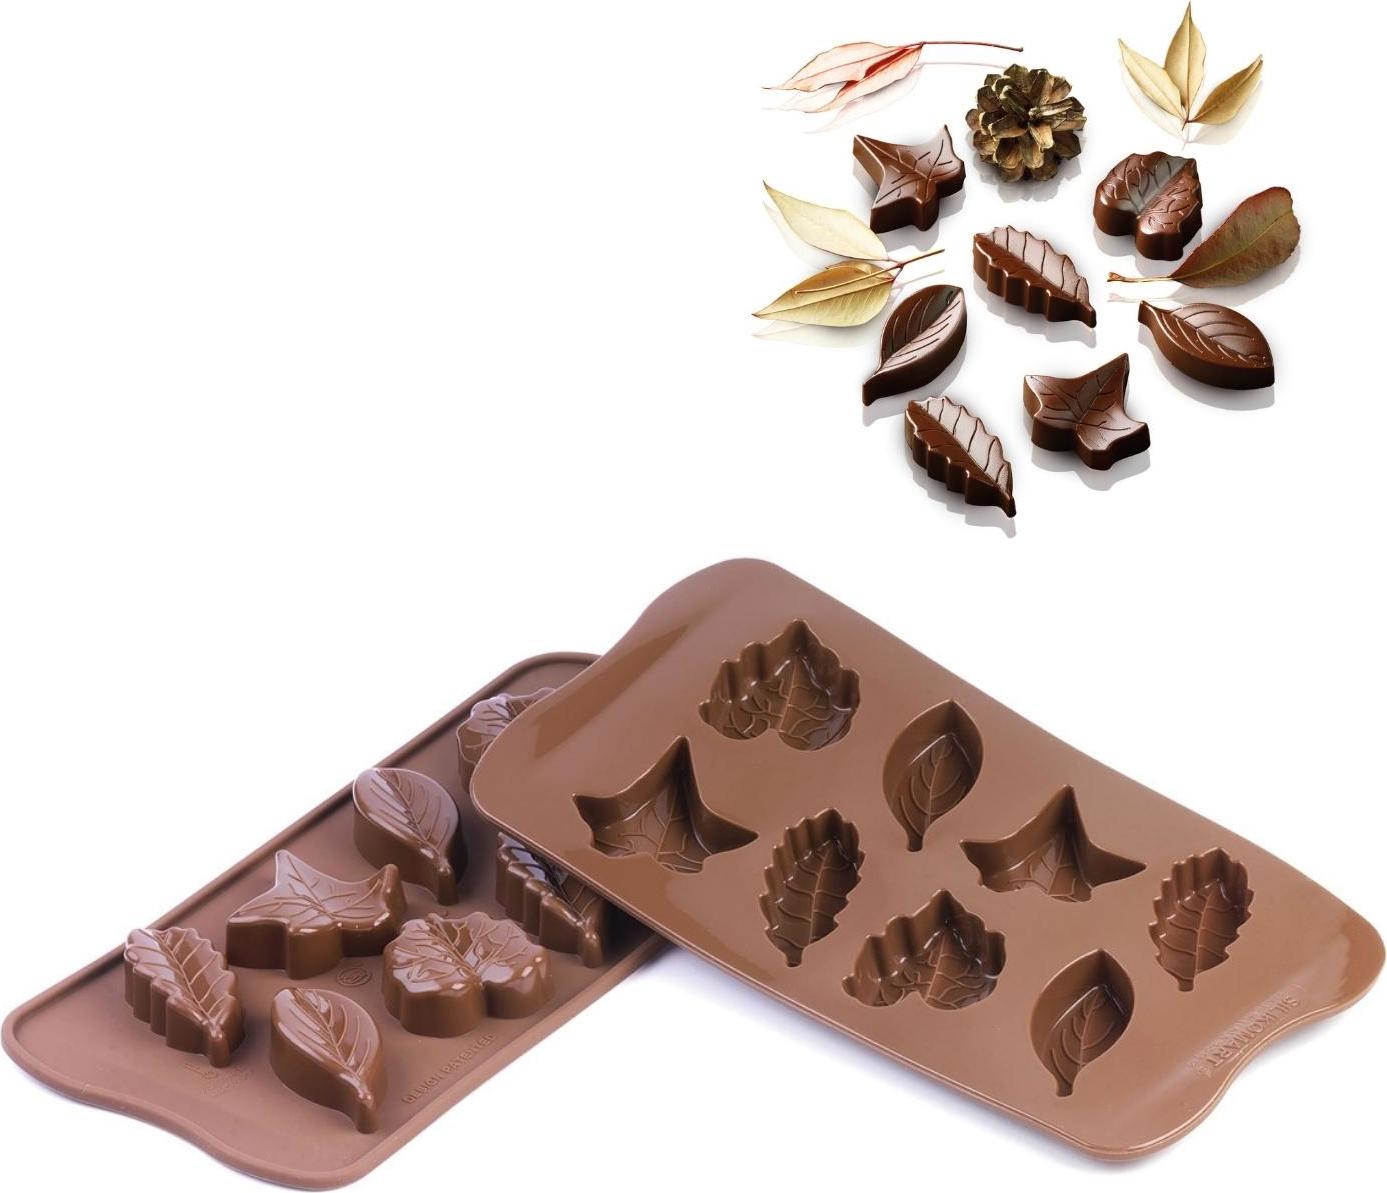 Scg10 Nature Chocolate mould silicone - Silikomart 22.110.77.0065